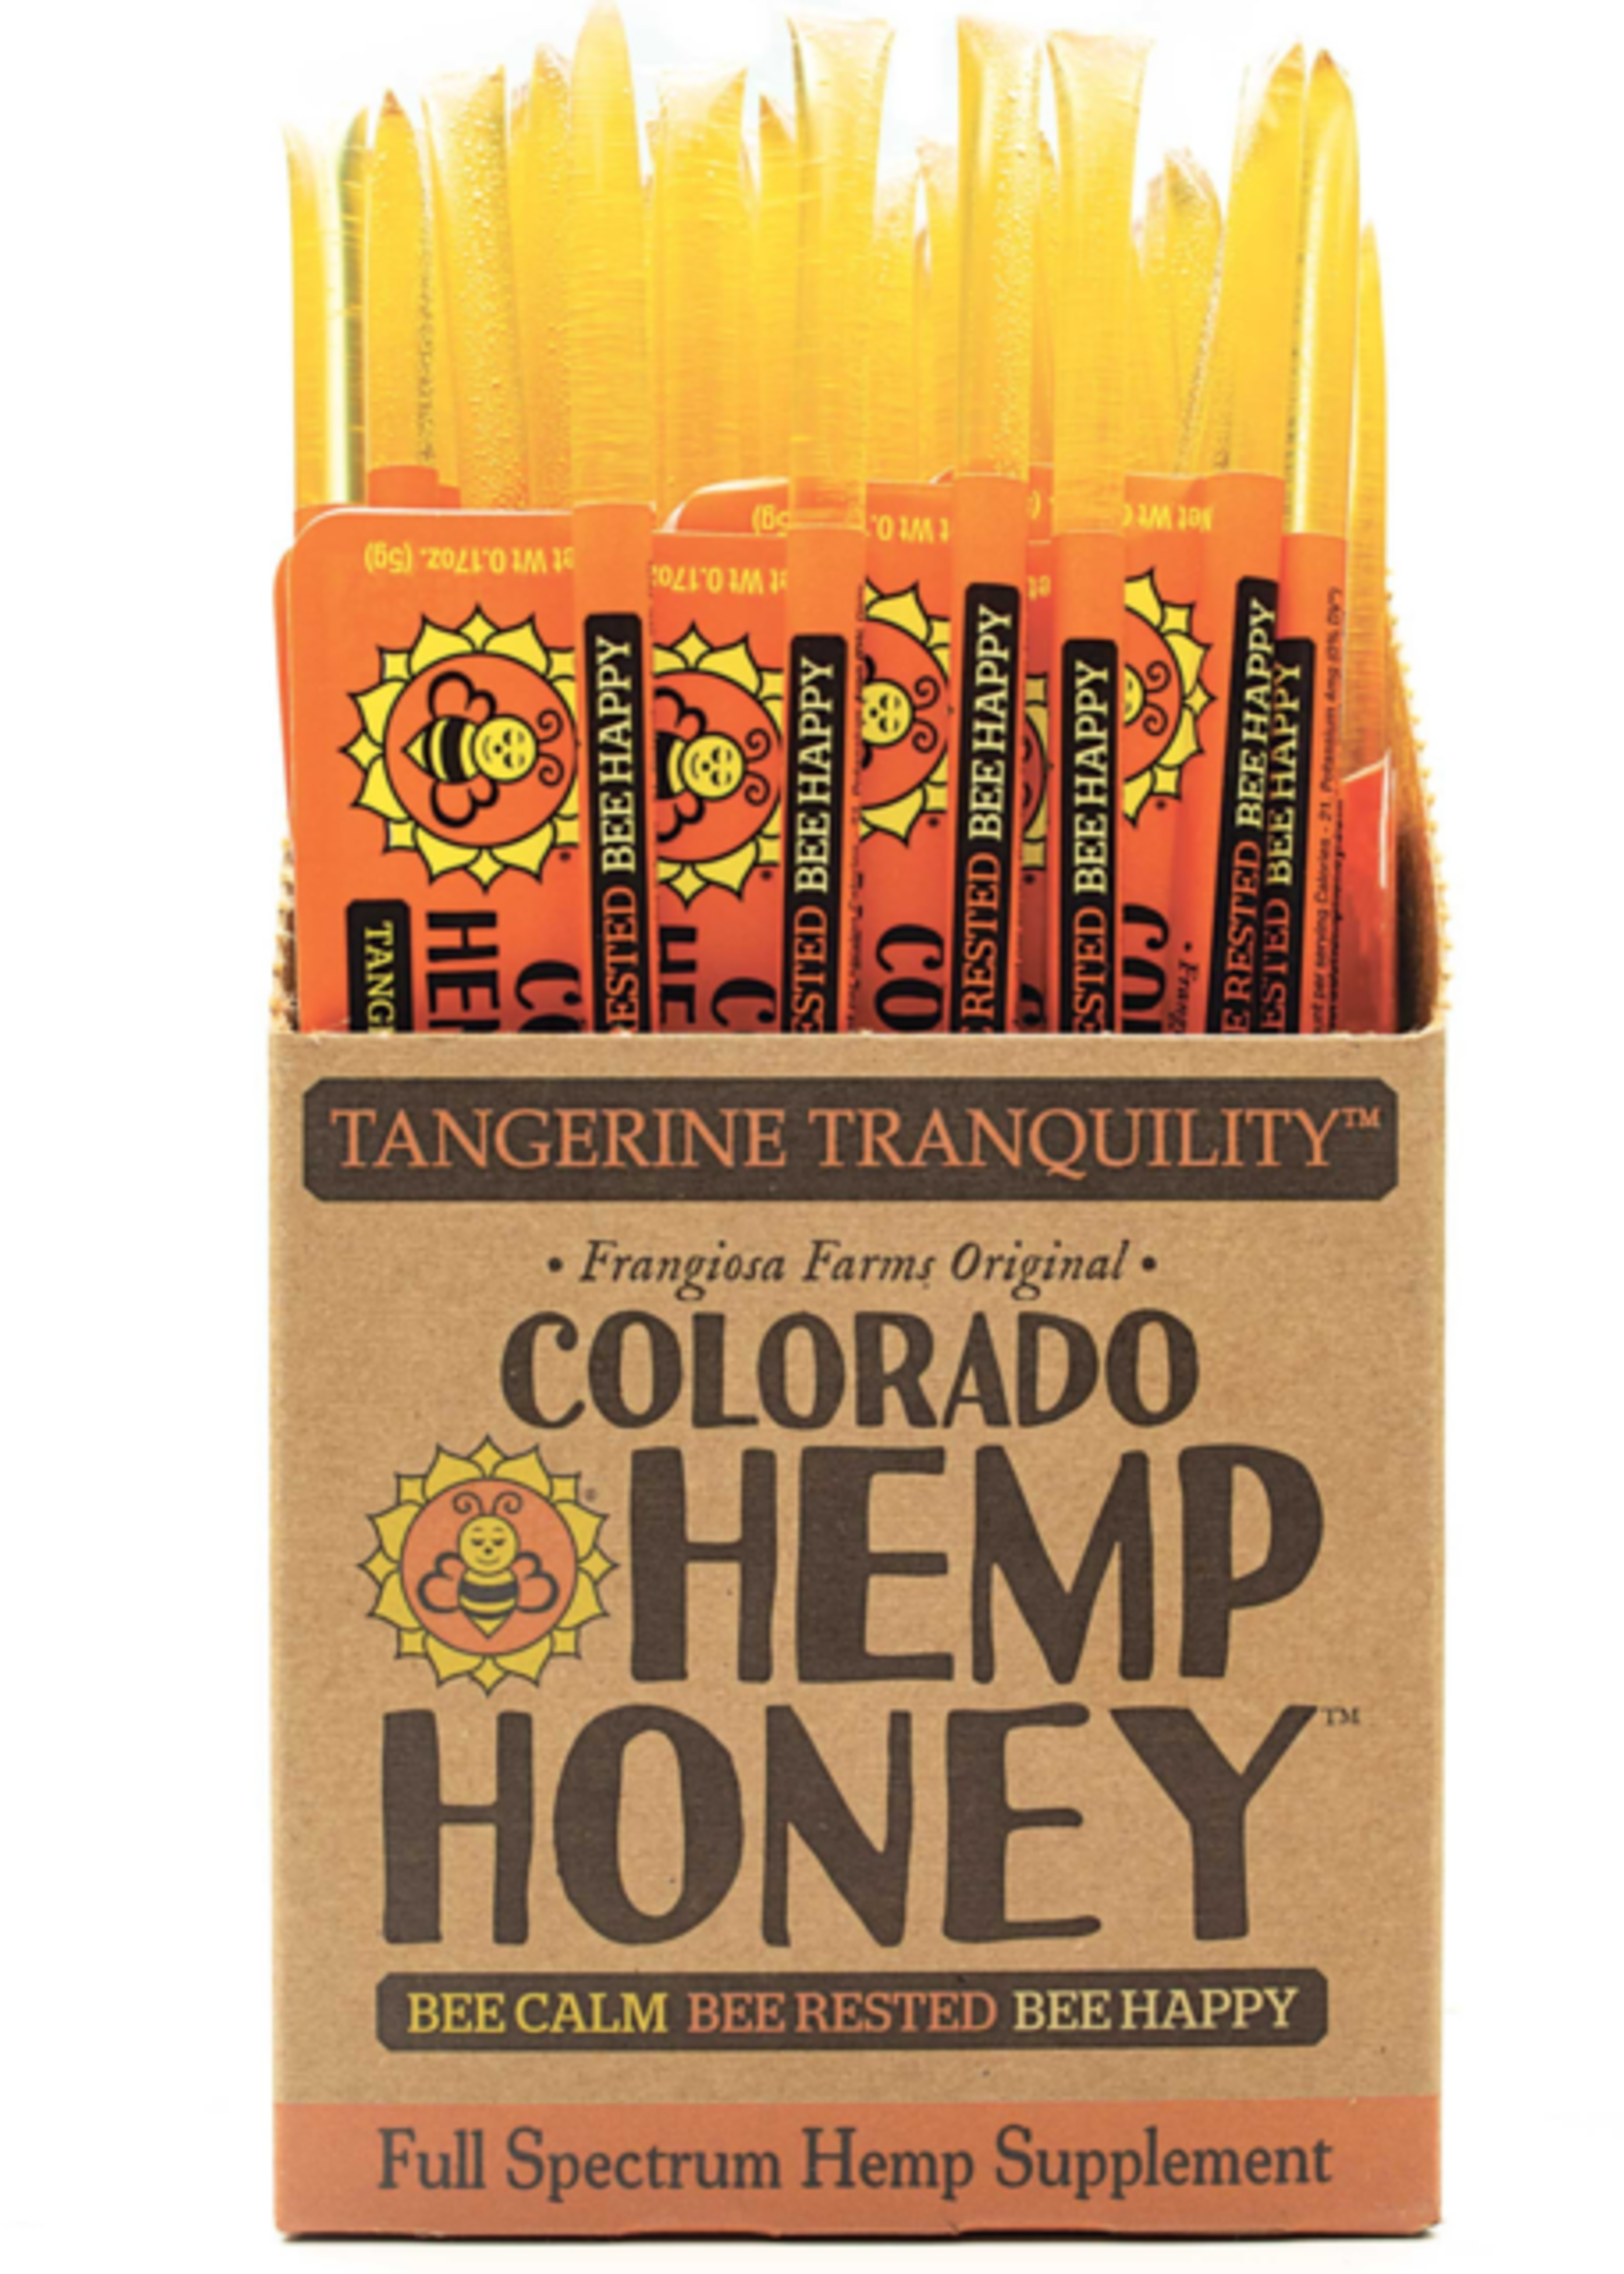 Colorado Hemp Honey Colorado Hemp Honey Tangerine Tranquility Sticks Full Spectrum Hemp Supplement